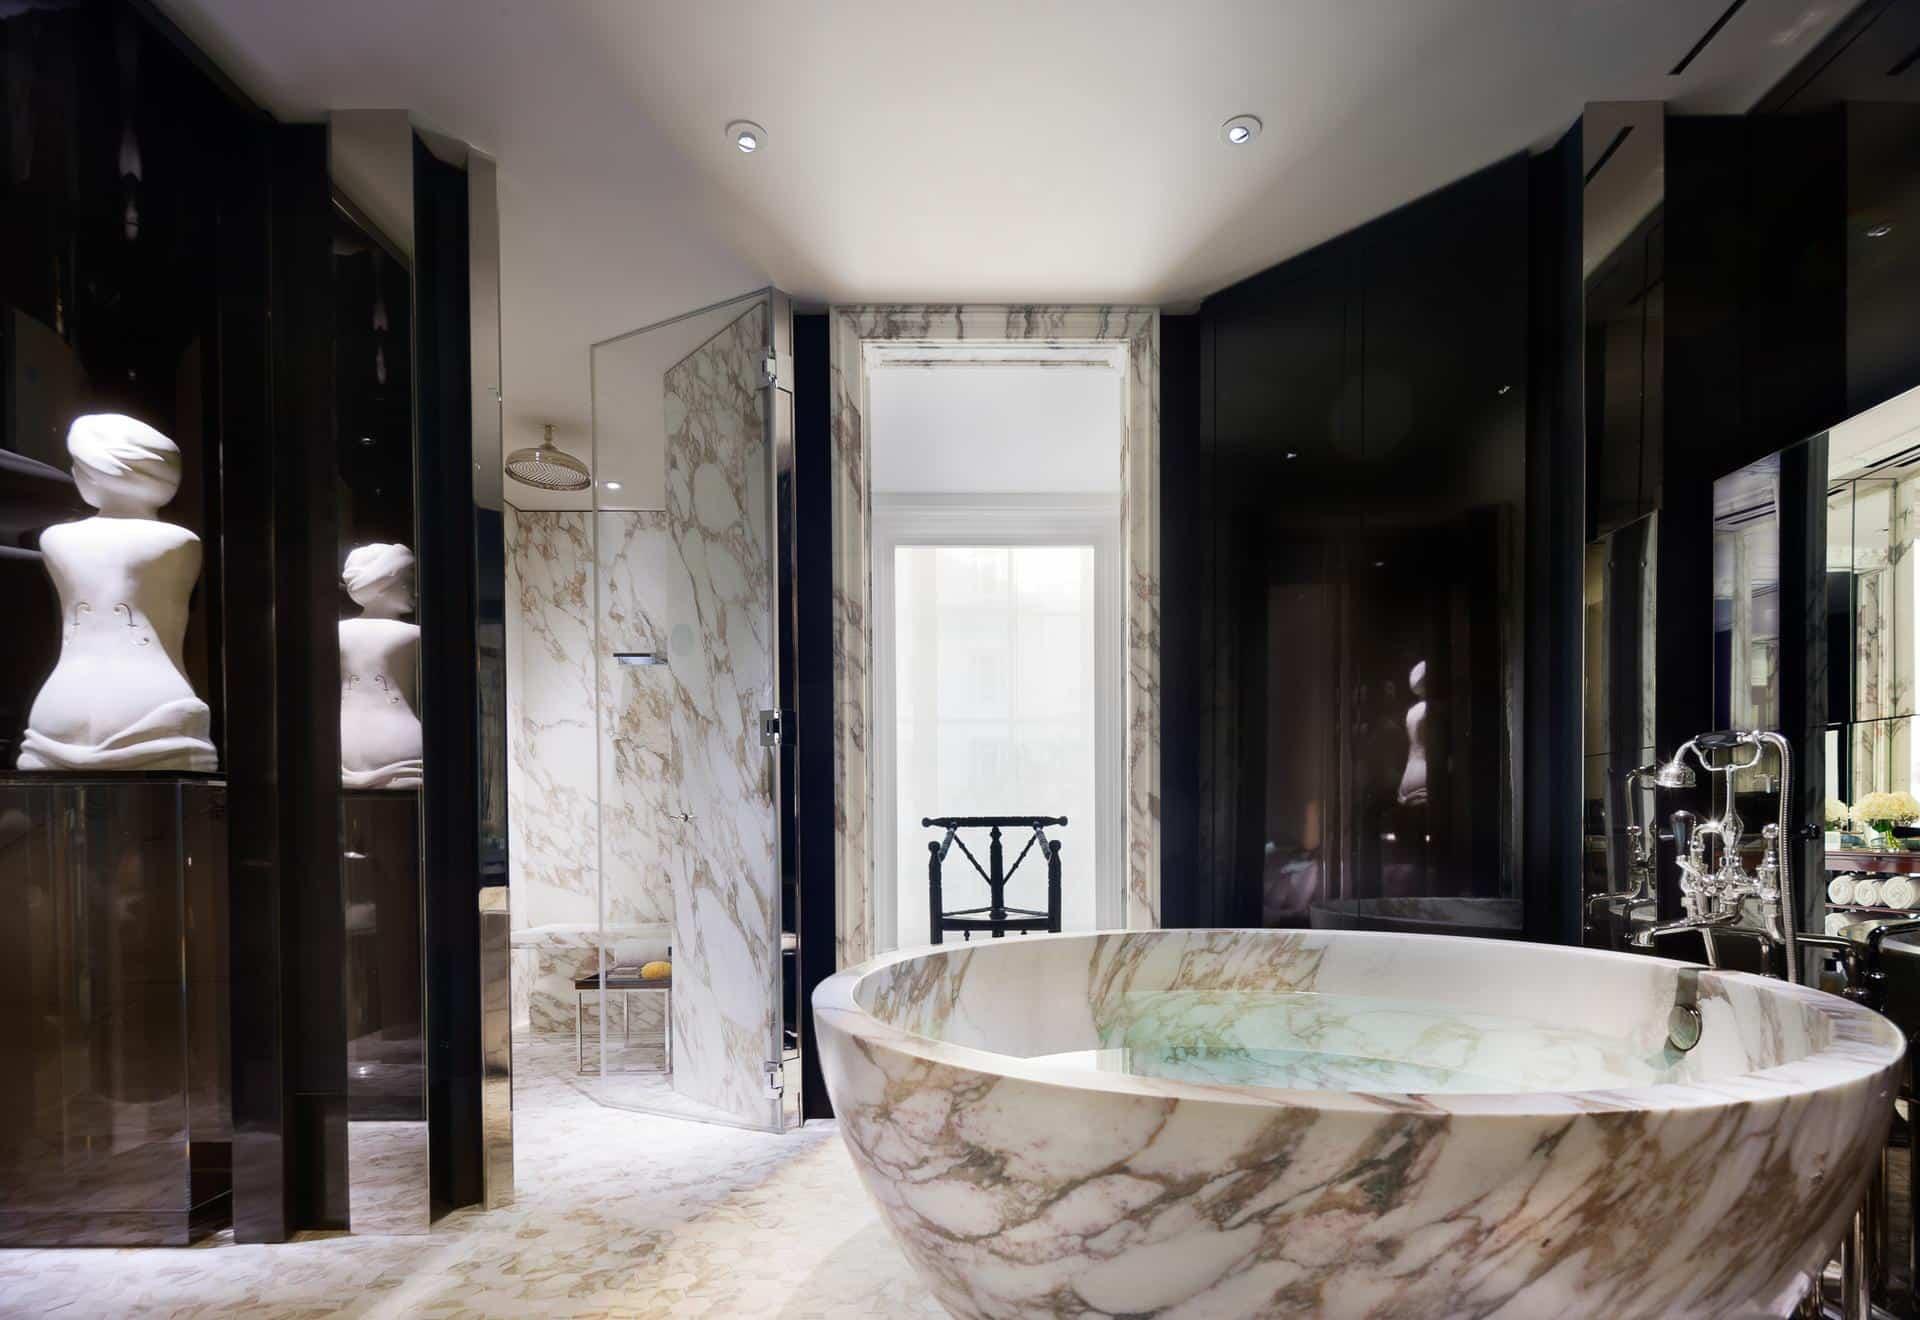 Marble bathtub at Rosewood London, Manor House